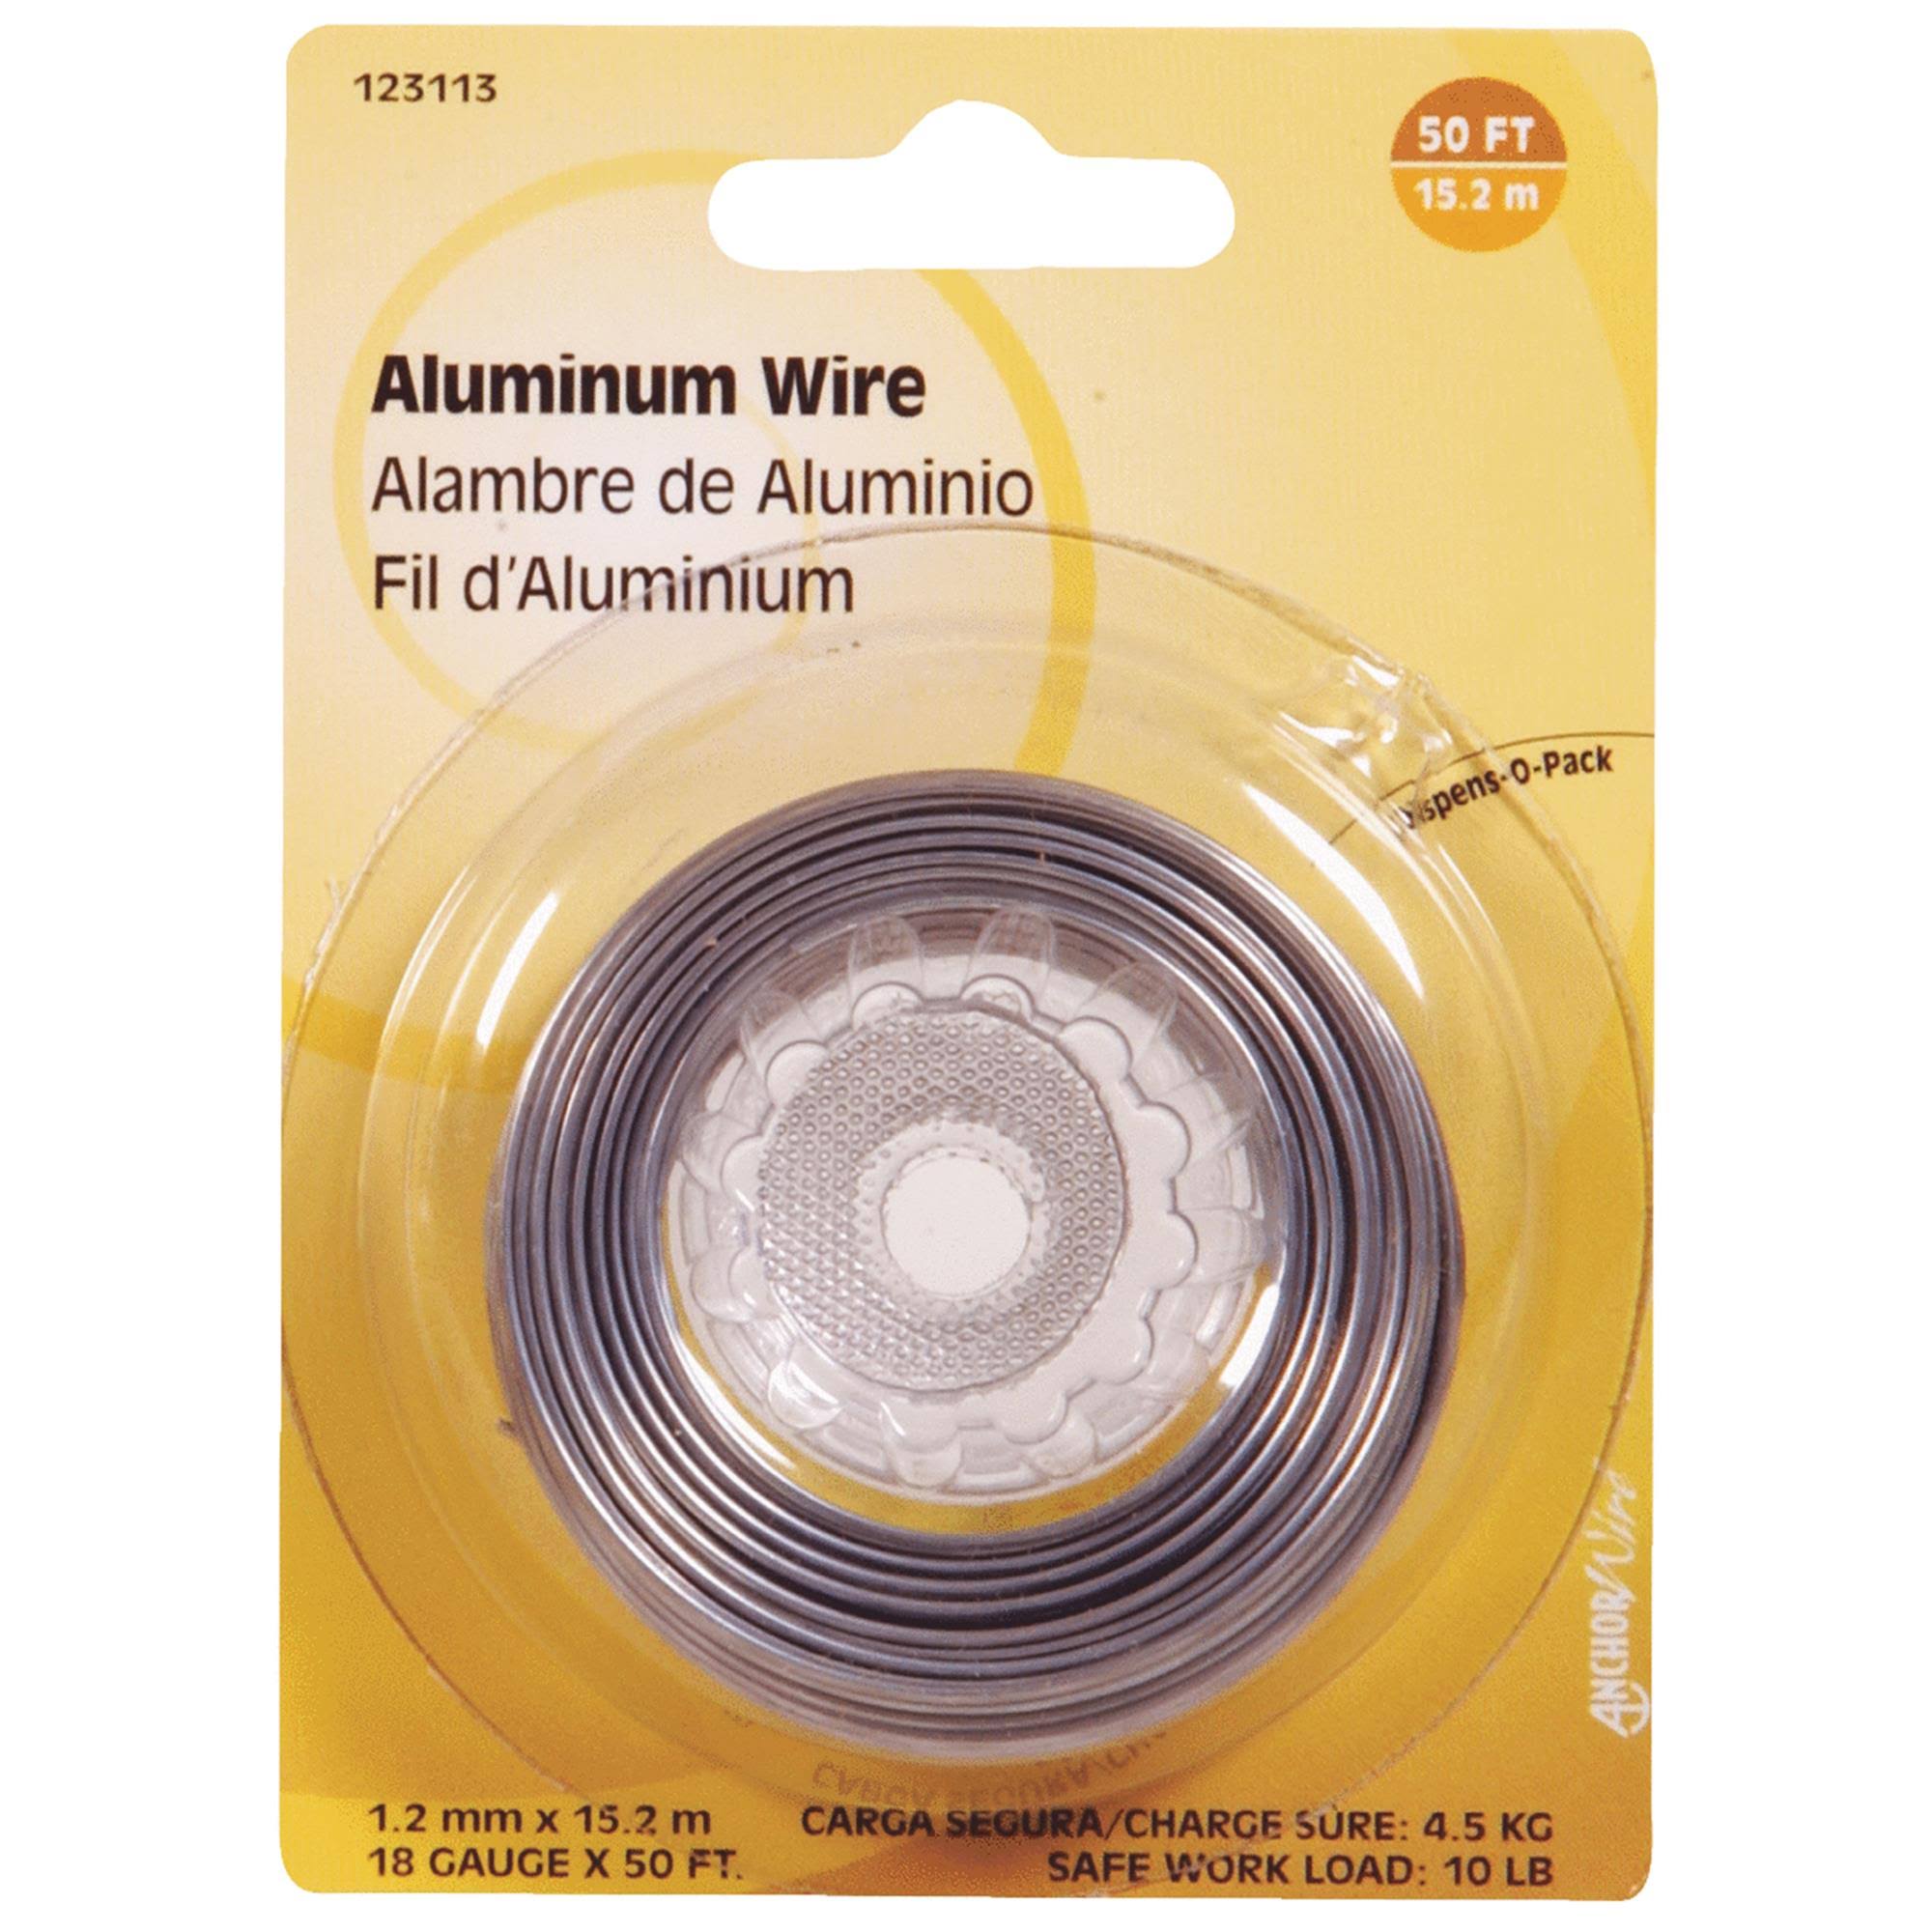 18-Gauge Aluminum Wire, 50', Hillman, 123113